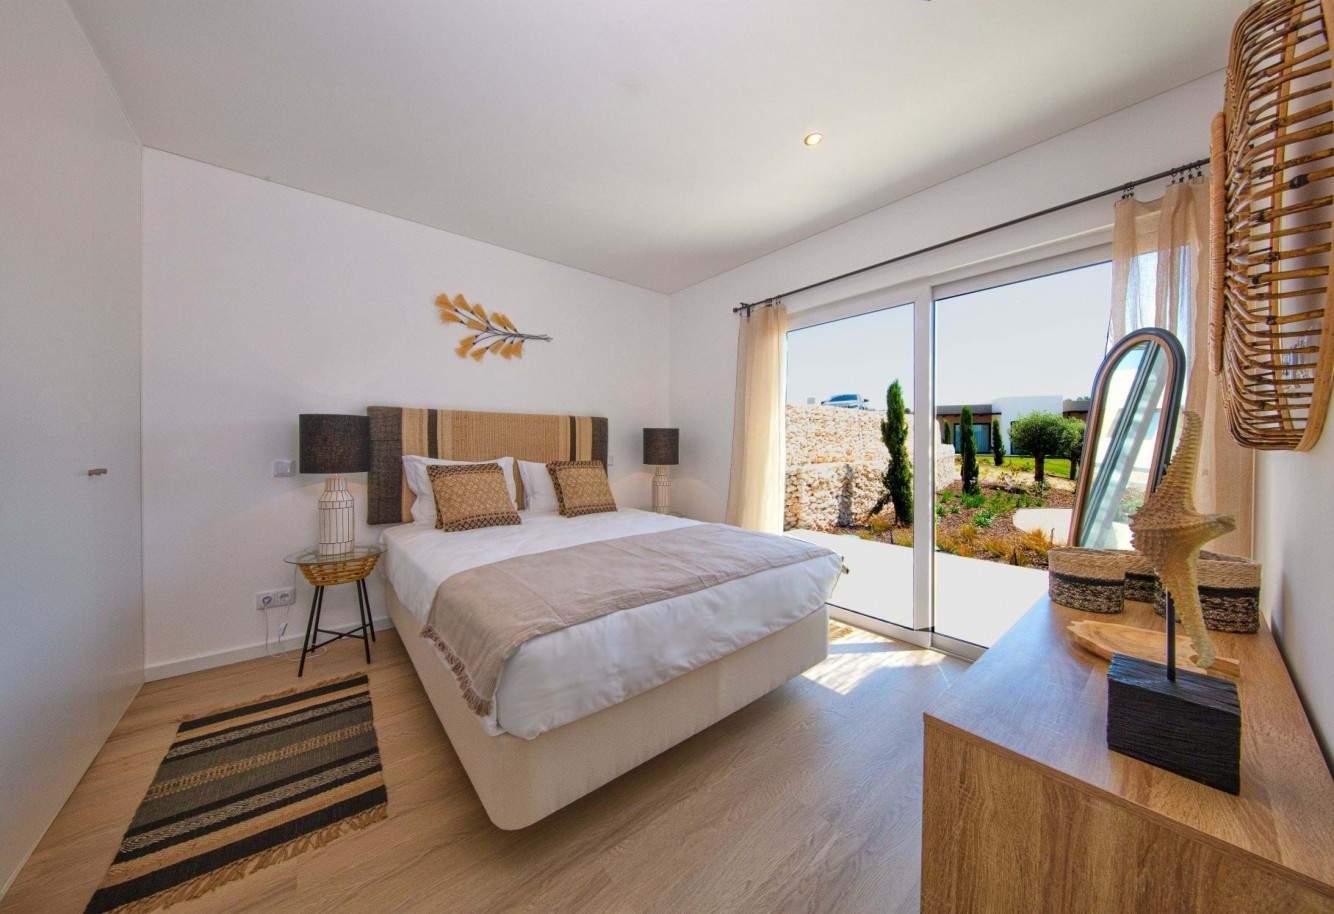 2+1 bedroom villa in resort, for sale in Carvoeiro, Algarve_204866